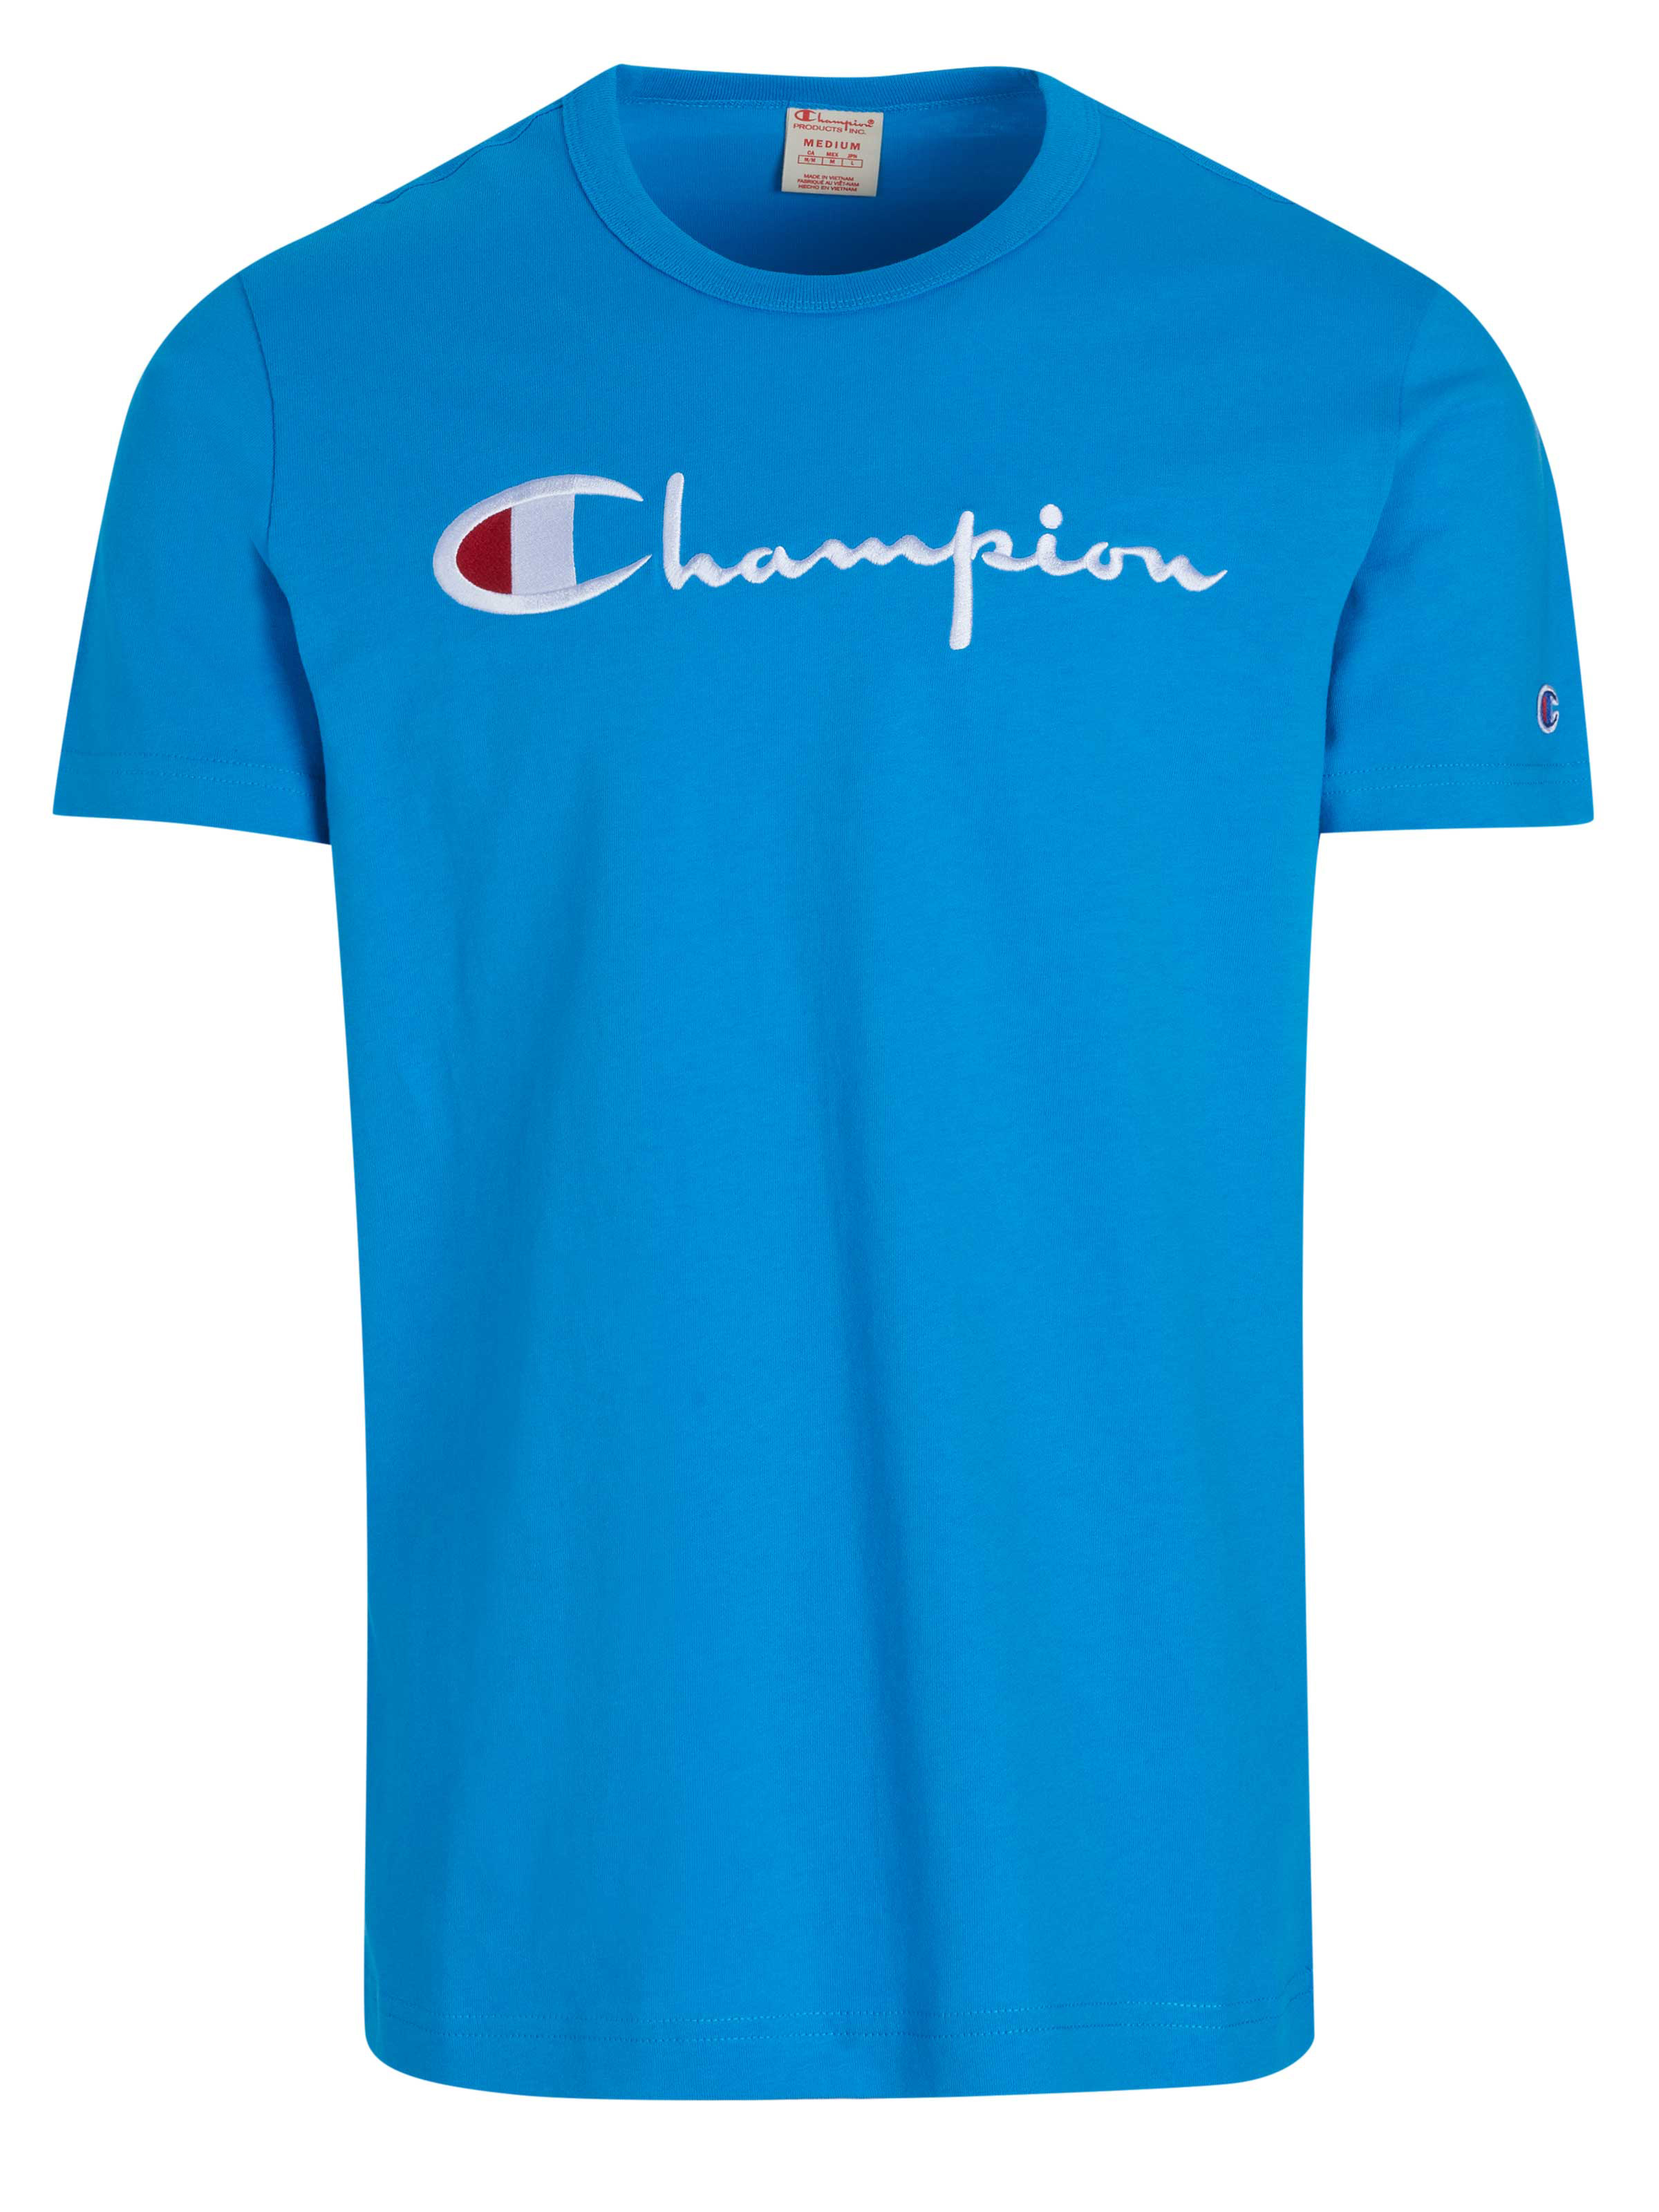 Champion T-shirt Blue on SALE | Fashionesta